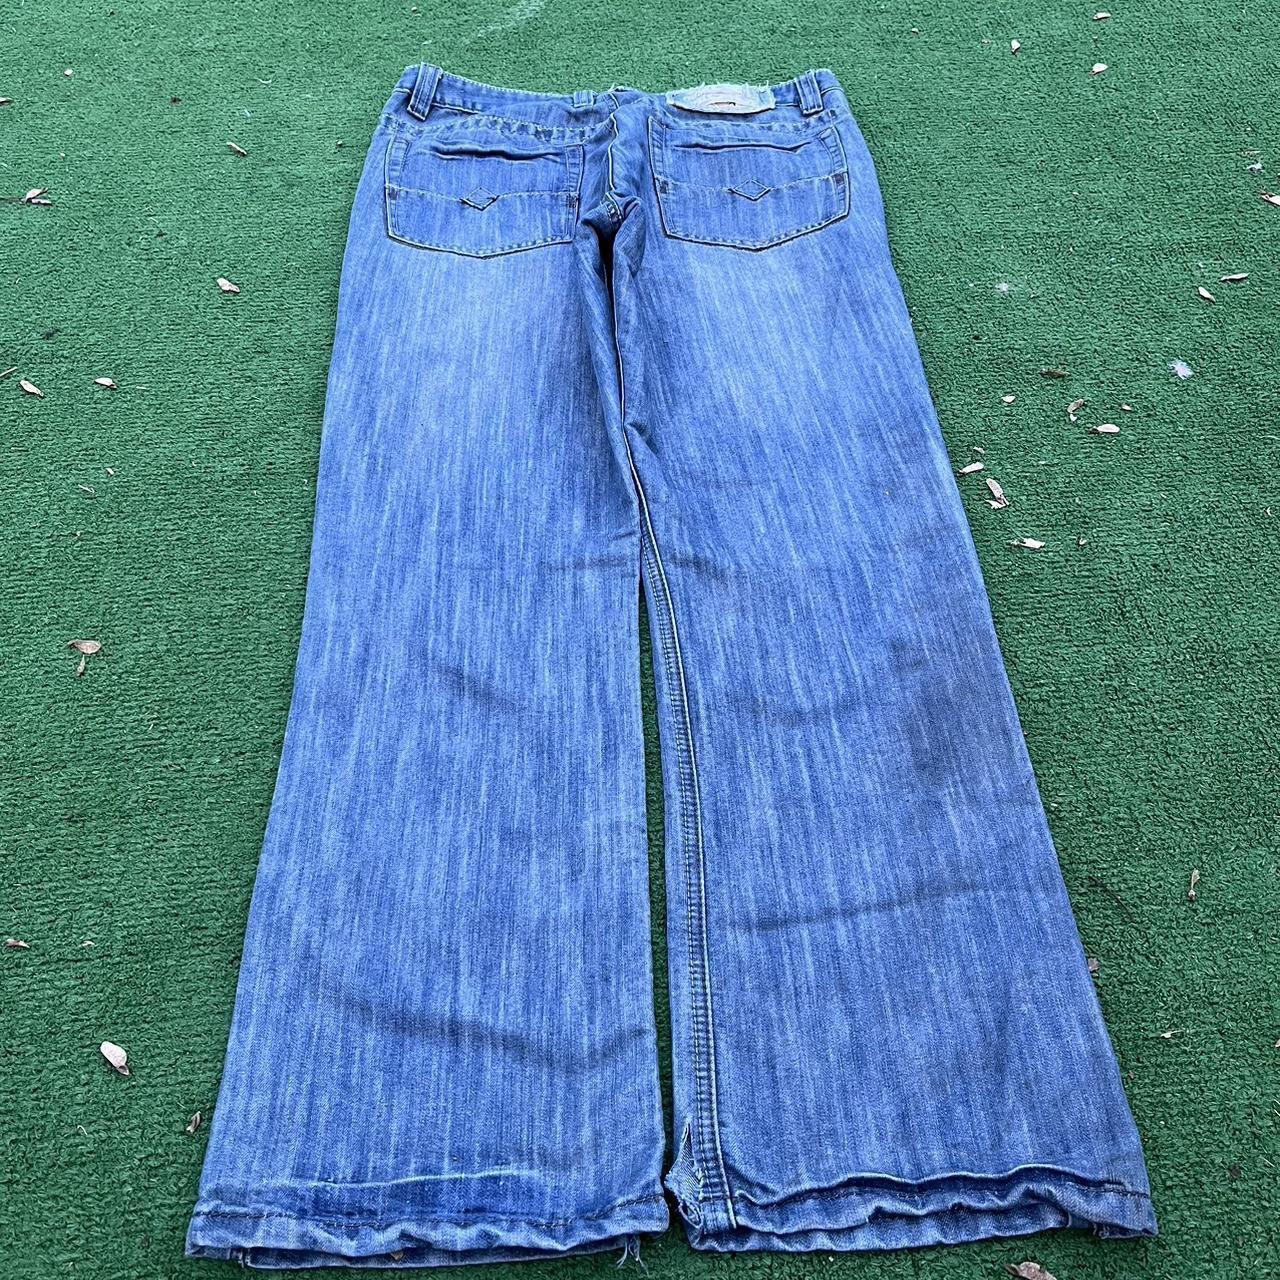 Baggy Jnco Style Machine Jeans Size 32X30 No... - Depop